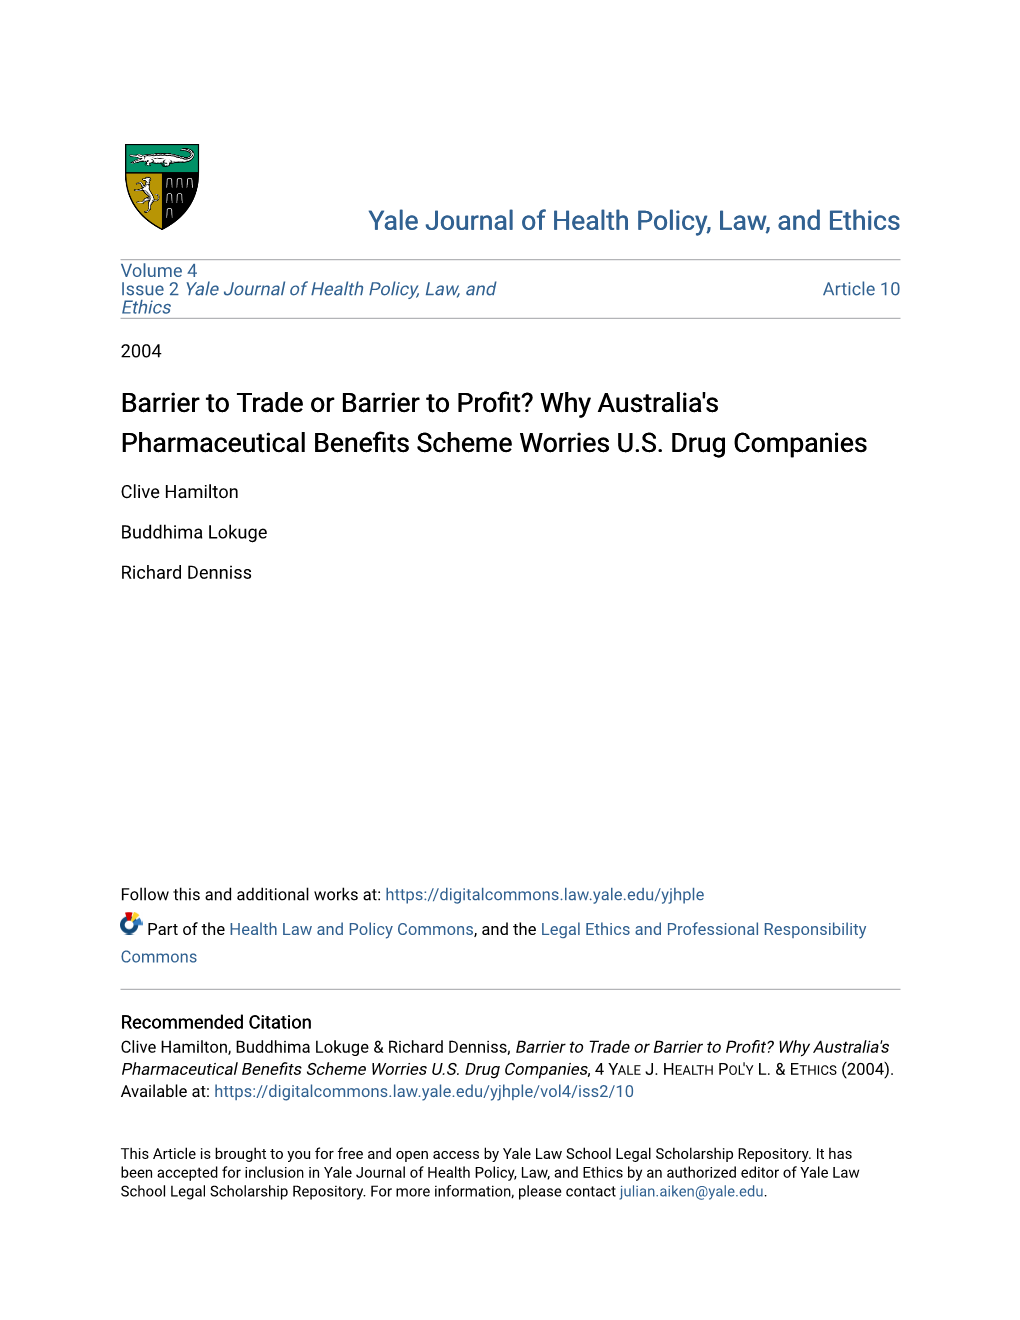 Why Australia's Pharmaceutical Benefits Scheme Worries US Drug